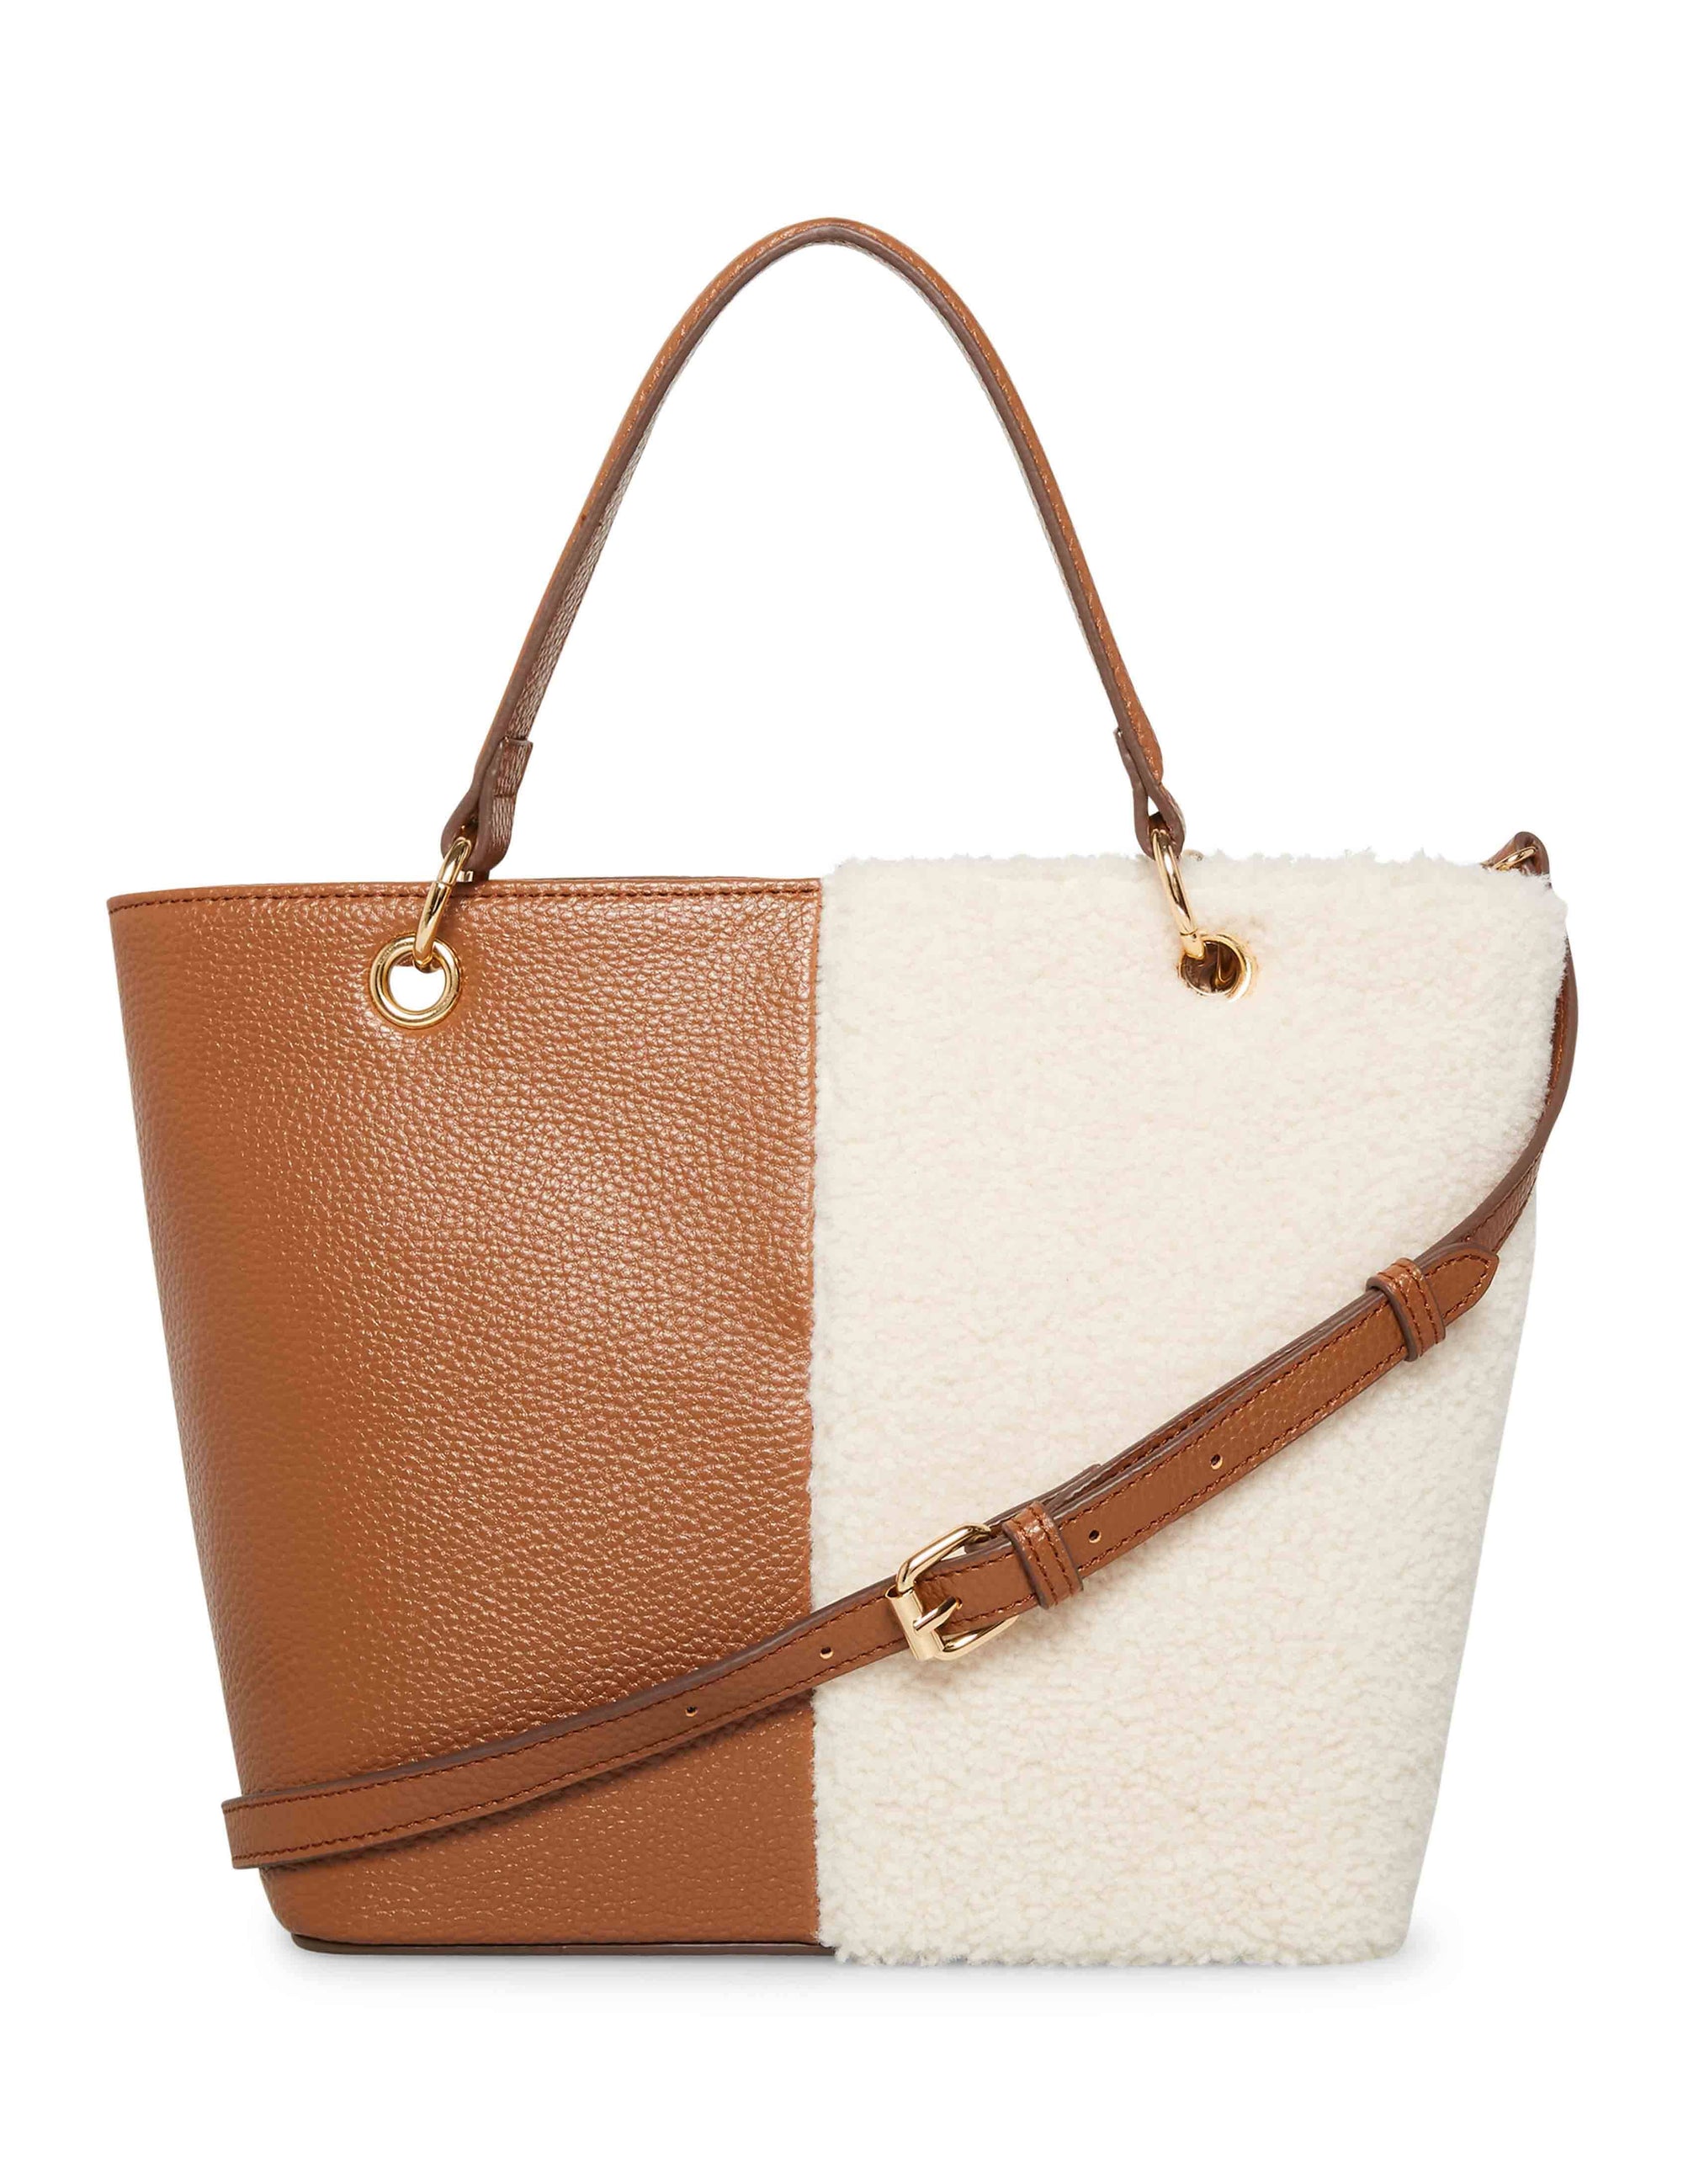 Convertible Executive Leather Bag Mini